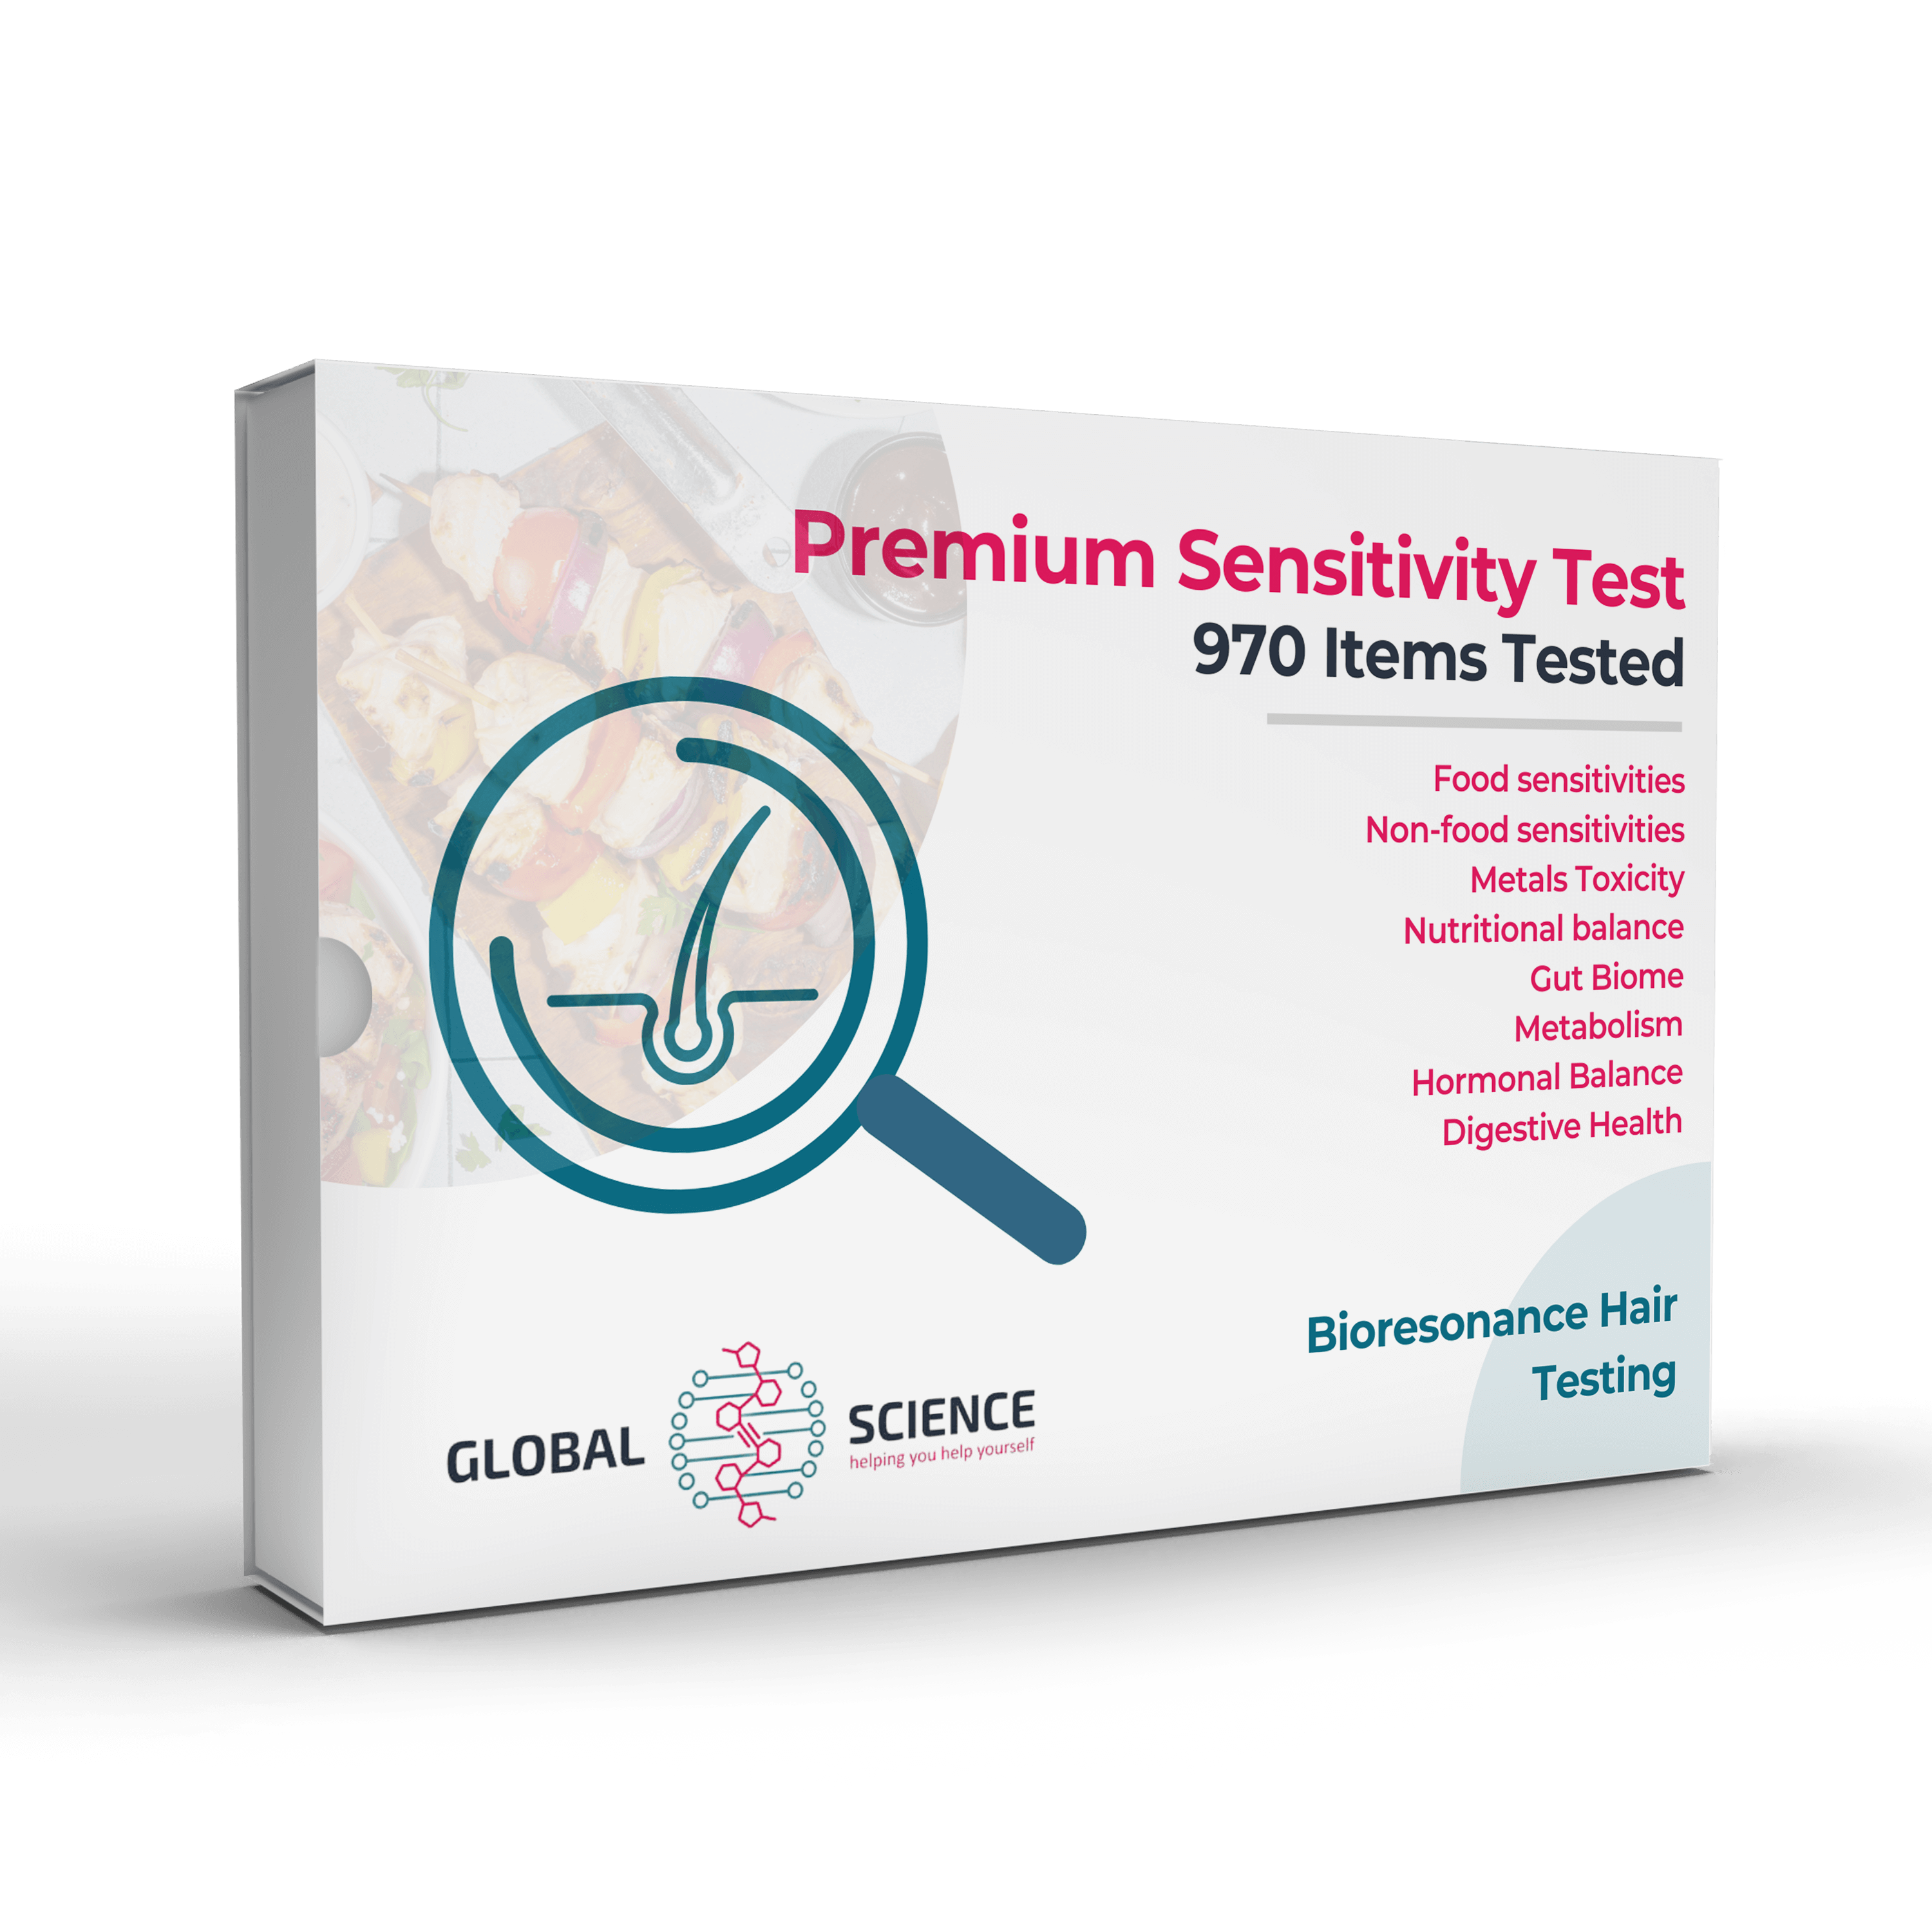 TMI TMA Premium Sensitivity Test - How allergy check kits work